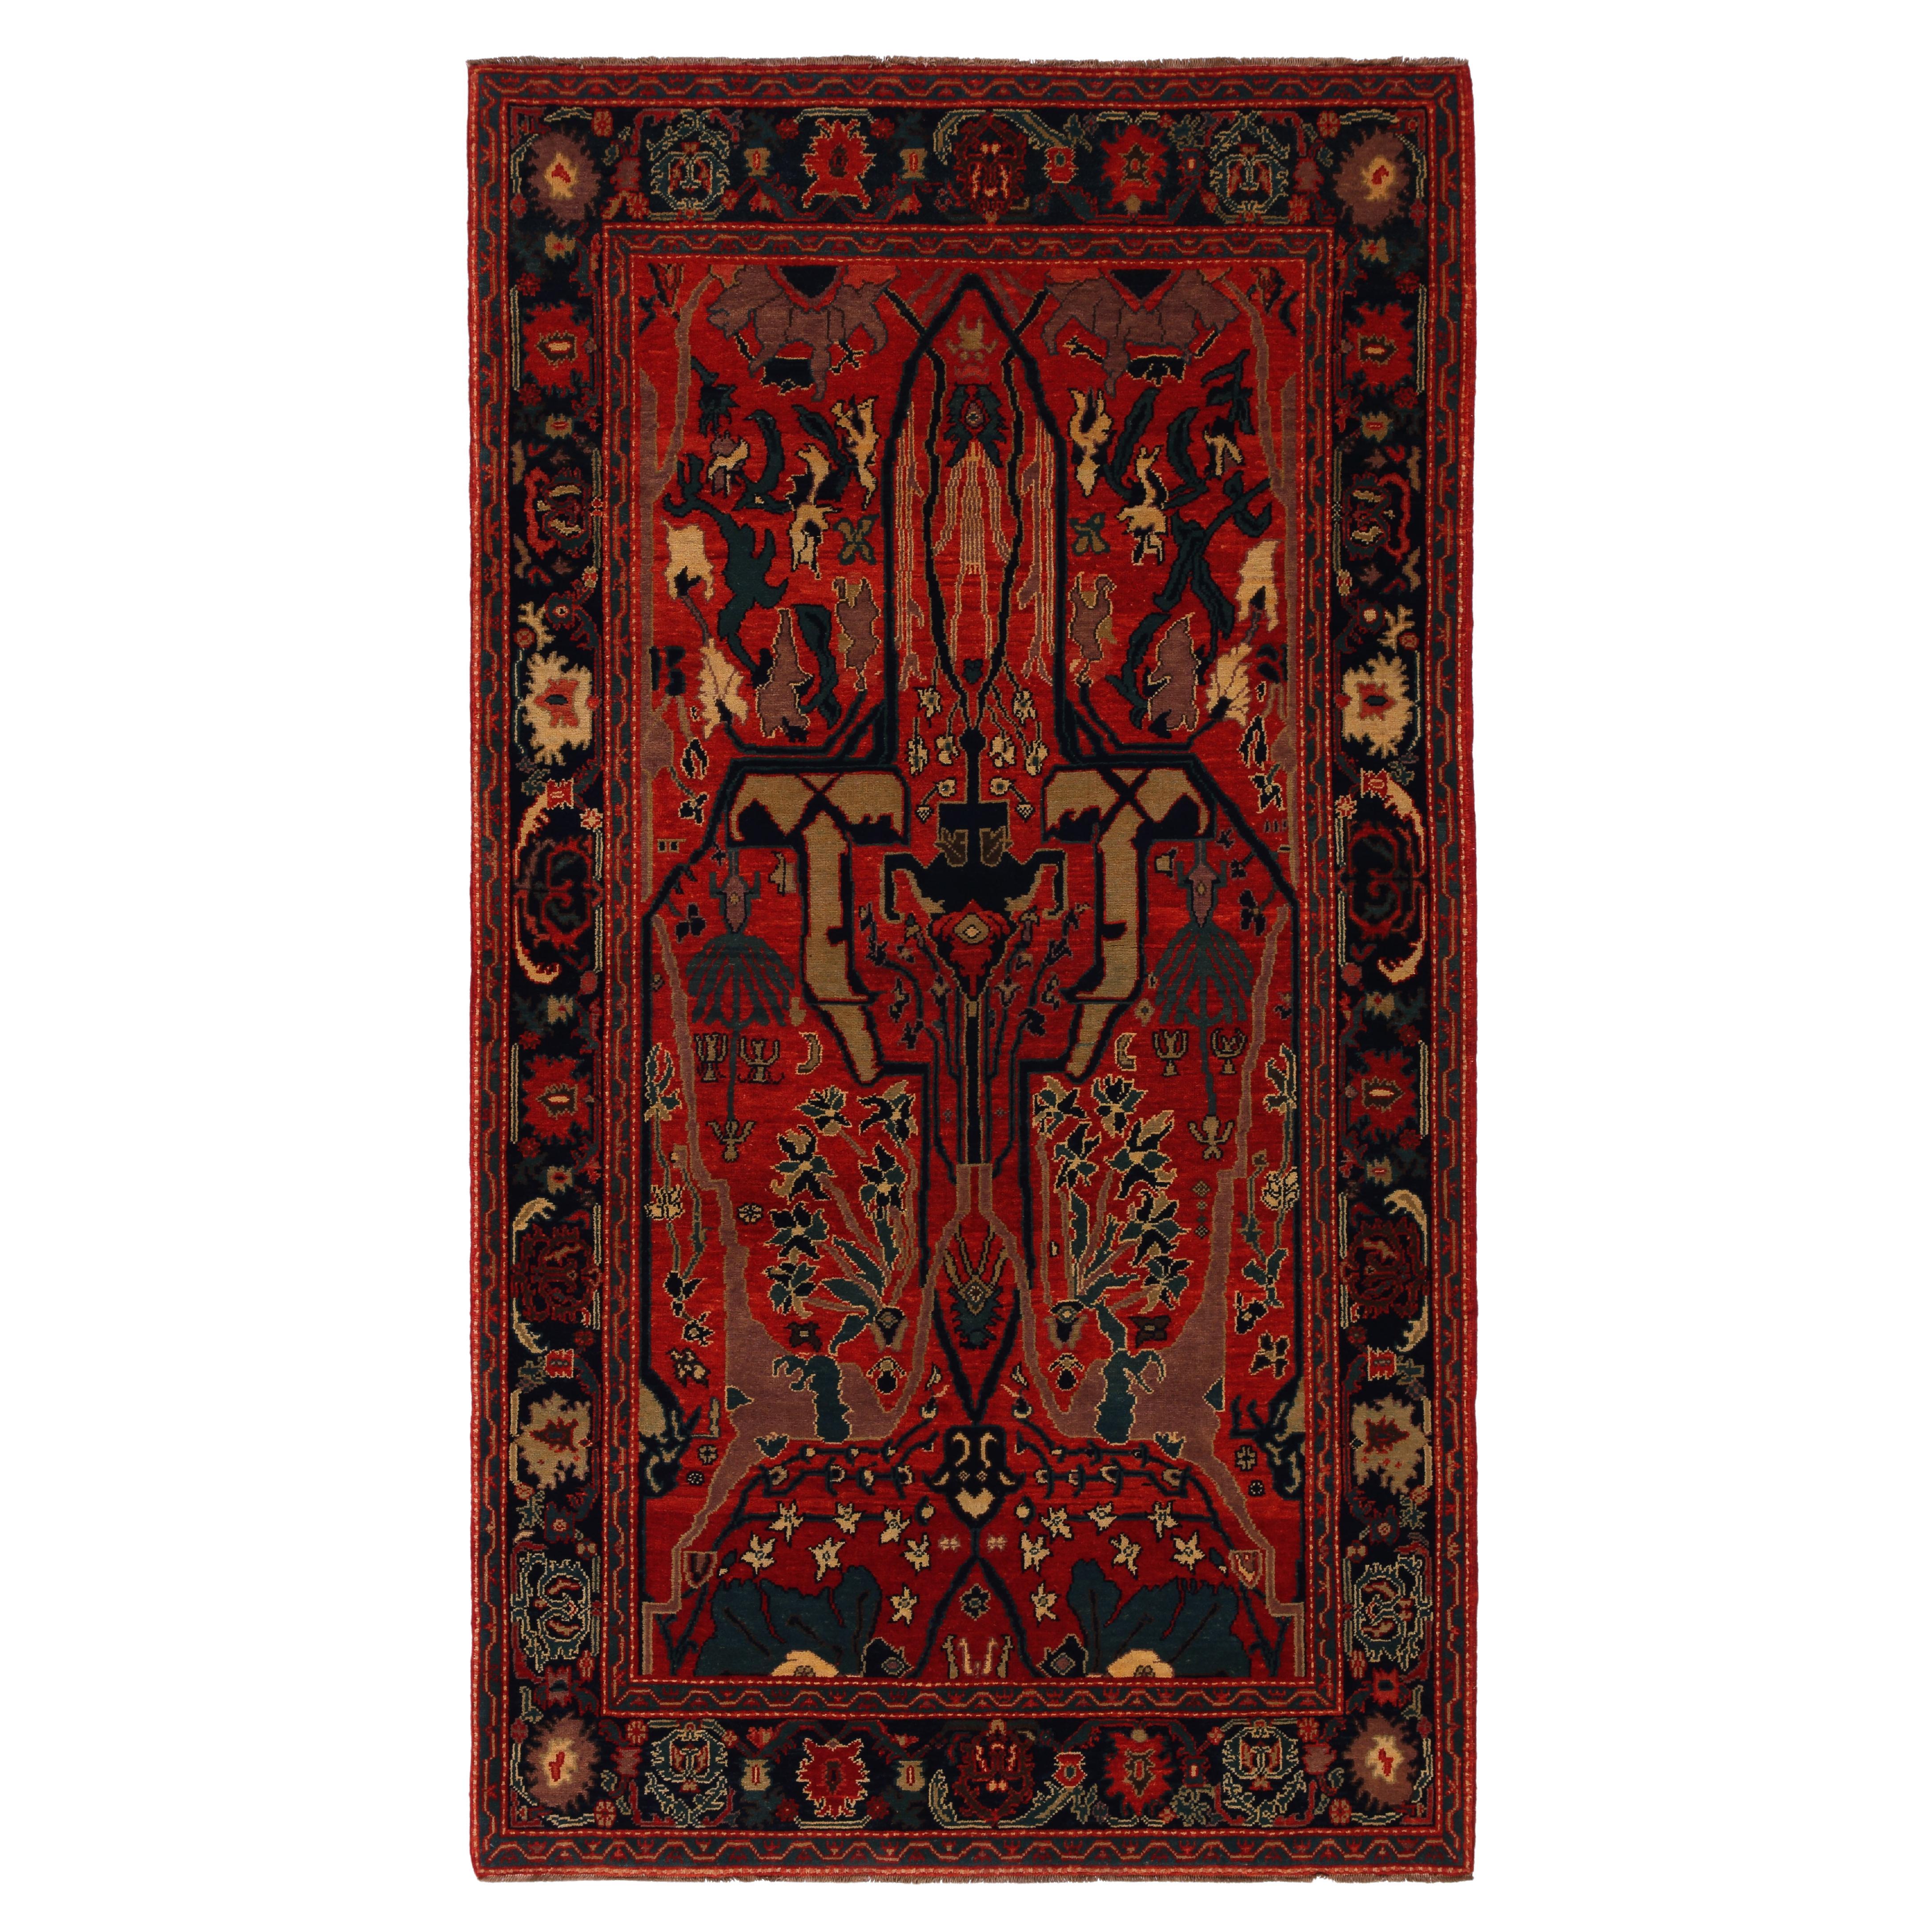 Ararat Rugs Gerous Arabesque Rug, 19th C. Persian Revival Carpet Natural Dyed